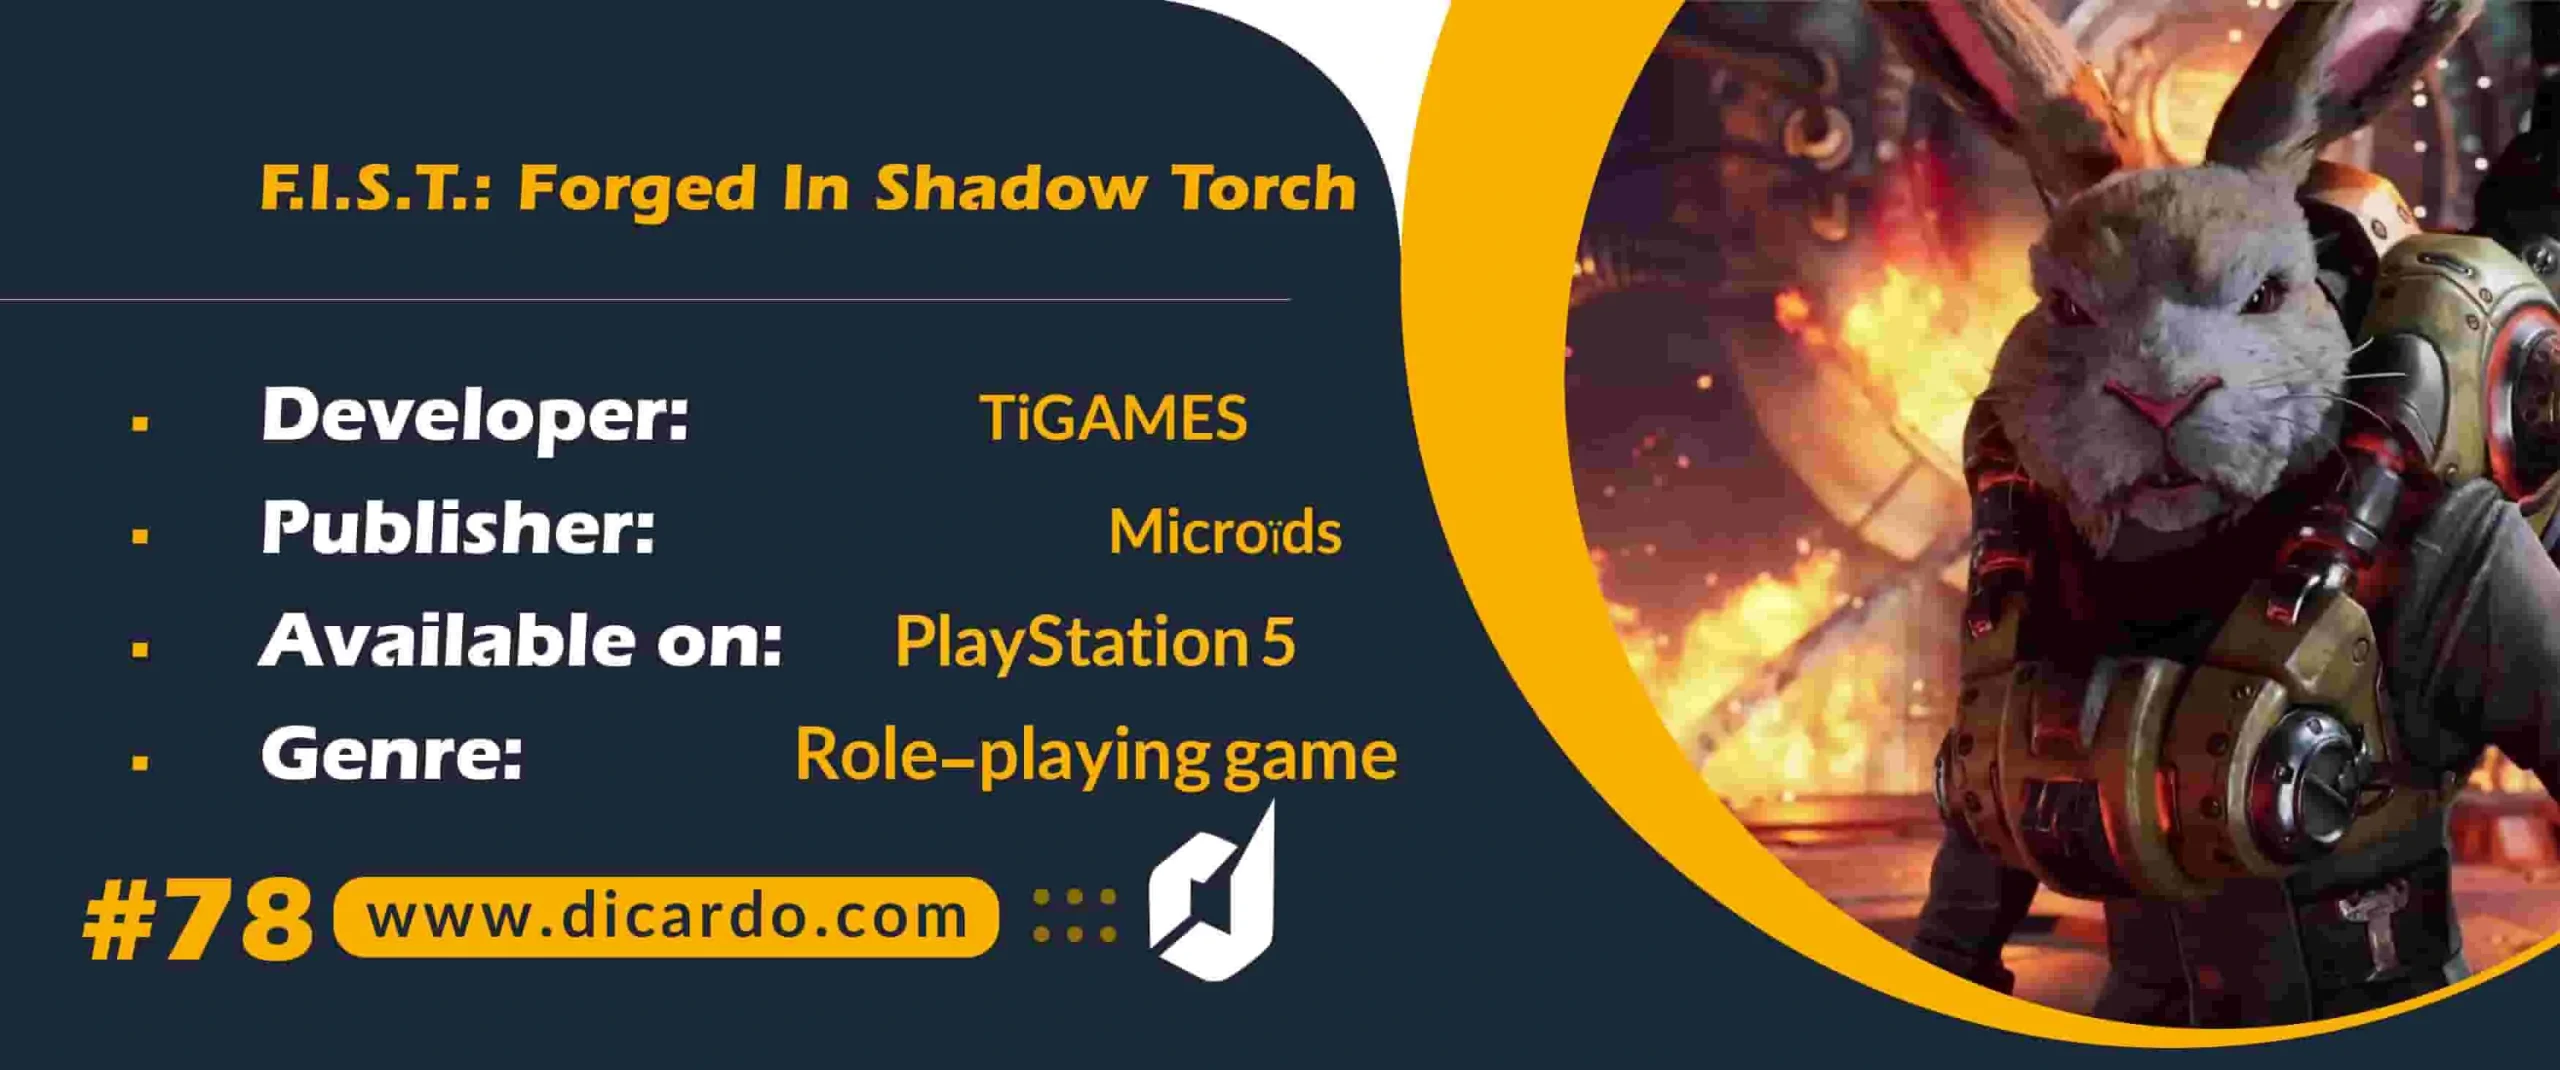 #78 اف آی اس تی فورجد این شادو تورچ F.I.S.T.: Forged In Shadow Torch